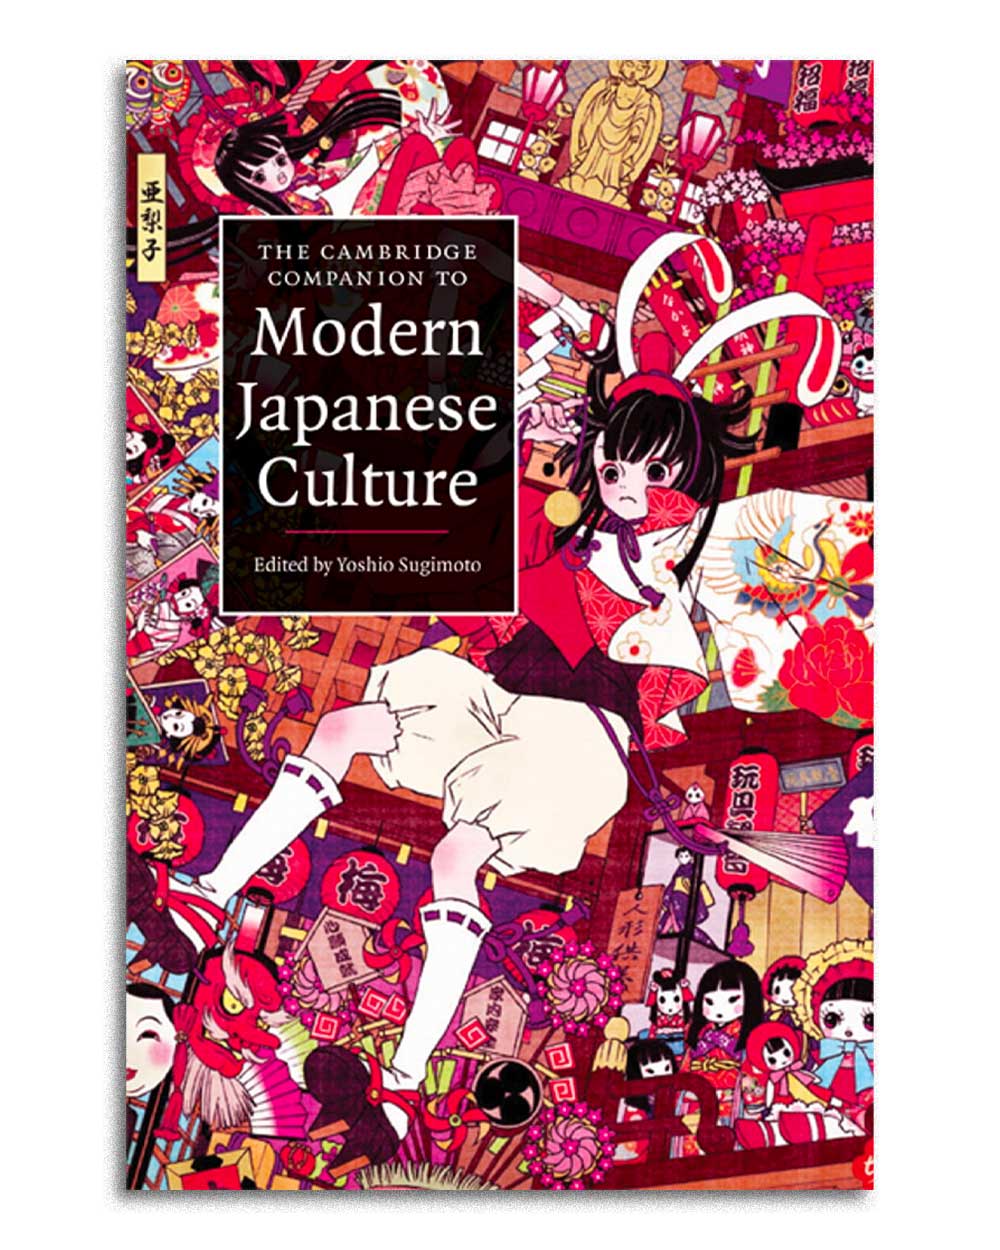 The Cambridge Companion to Modern Japanese Culture by Sugimoto Yoshio